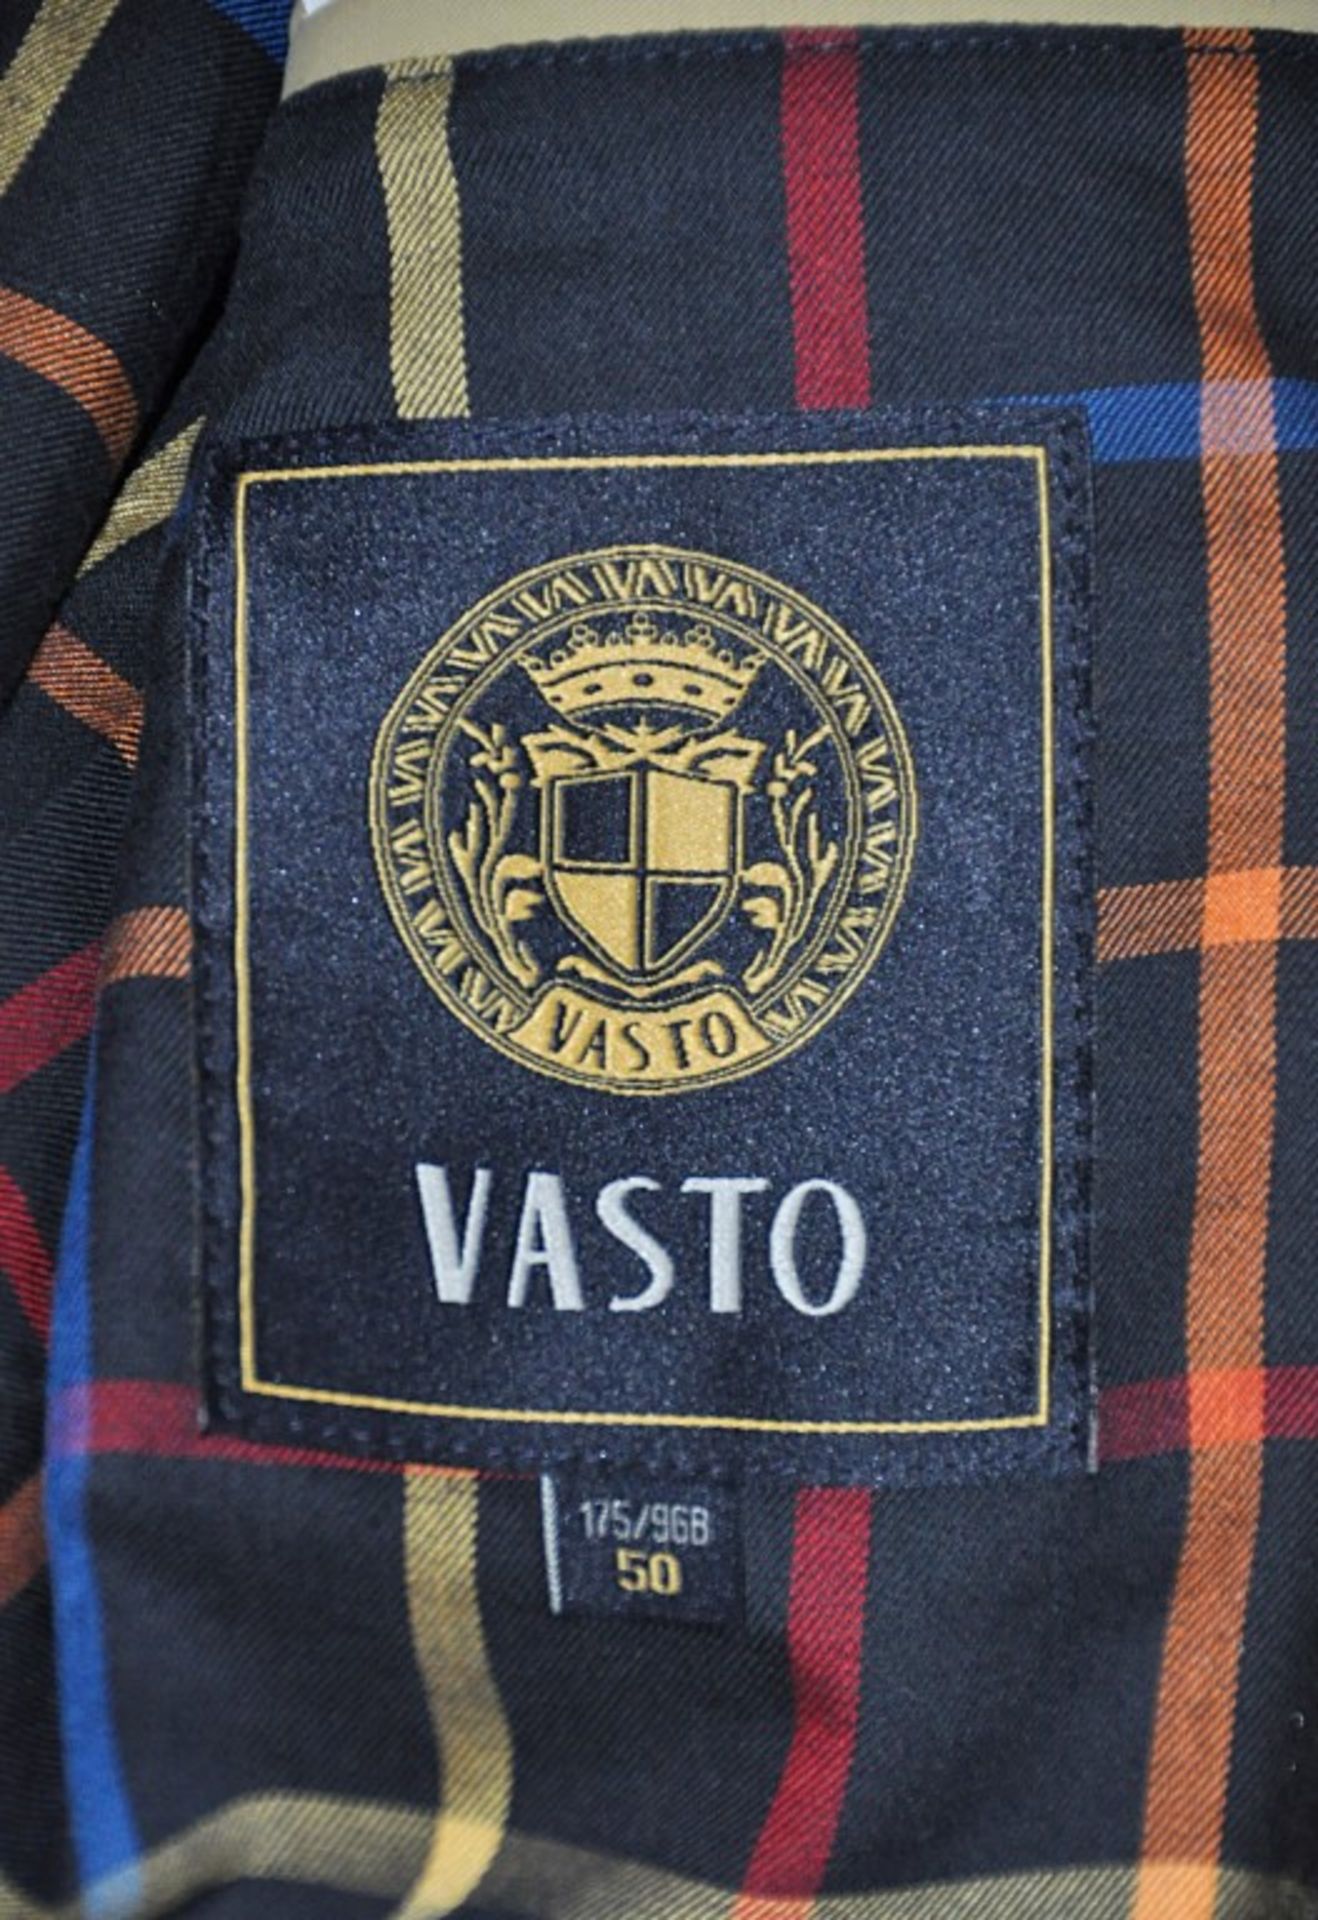 1 x Men's Trench Coat / Long Jacket By International Luxury Brand "Vasto" (BAD7107) – Size: - Image 3 of 6